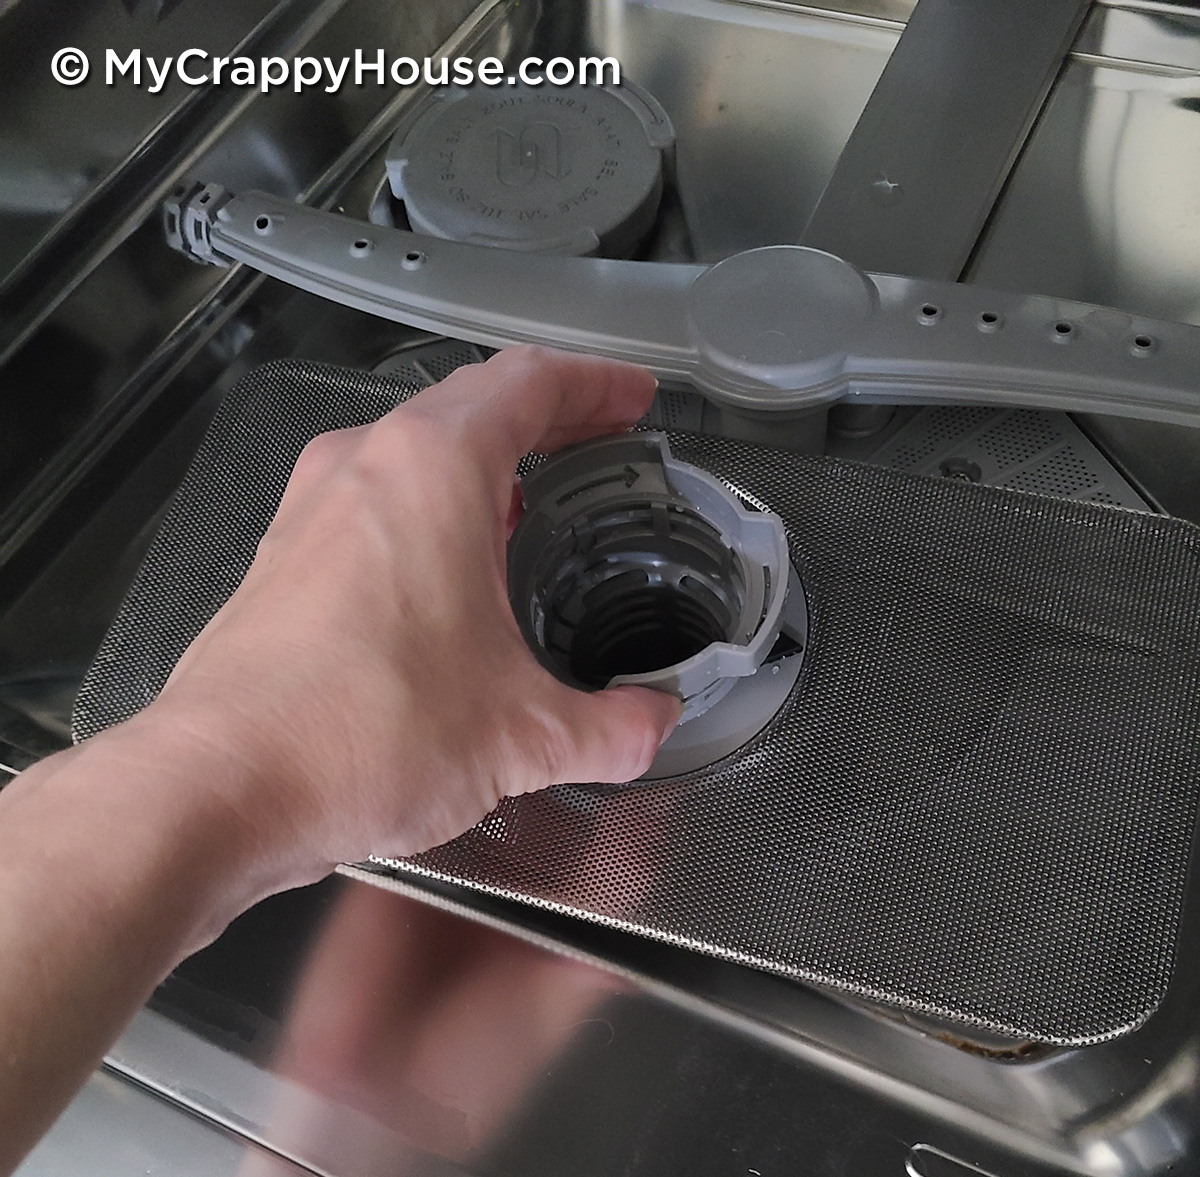 Taking off dishwasher filter cover